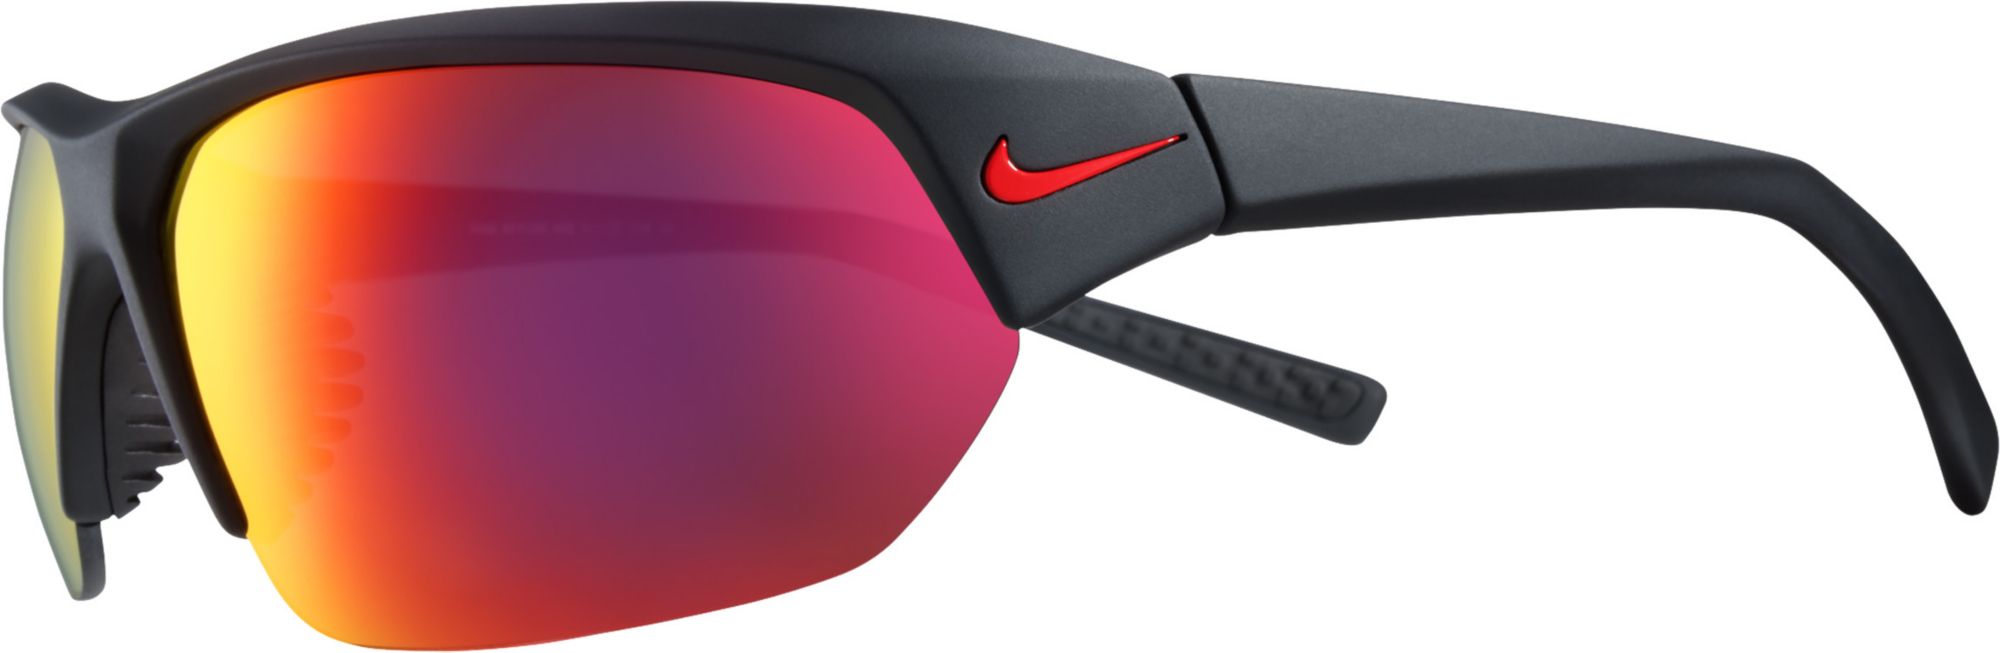 Nike Skylon Ace Sunglasses | Golf Galaxy